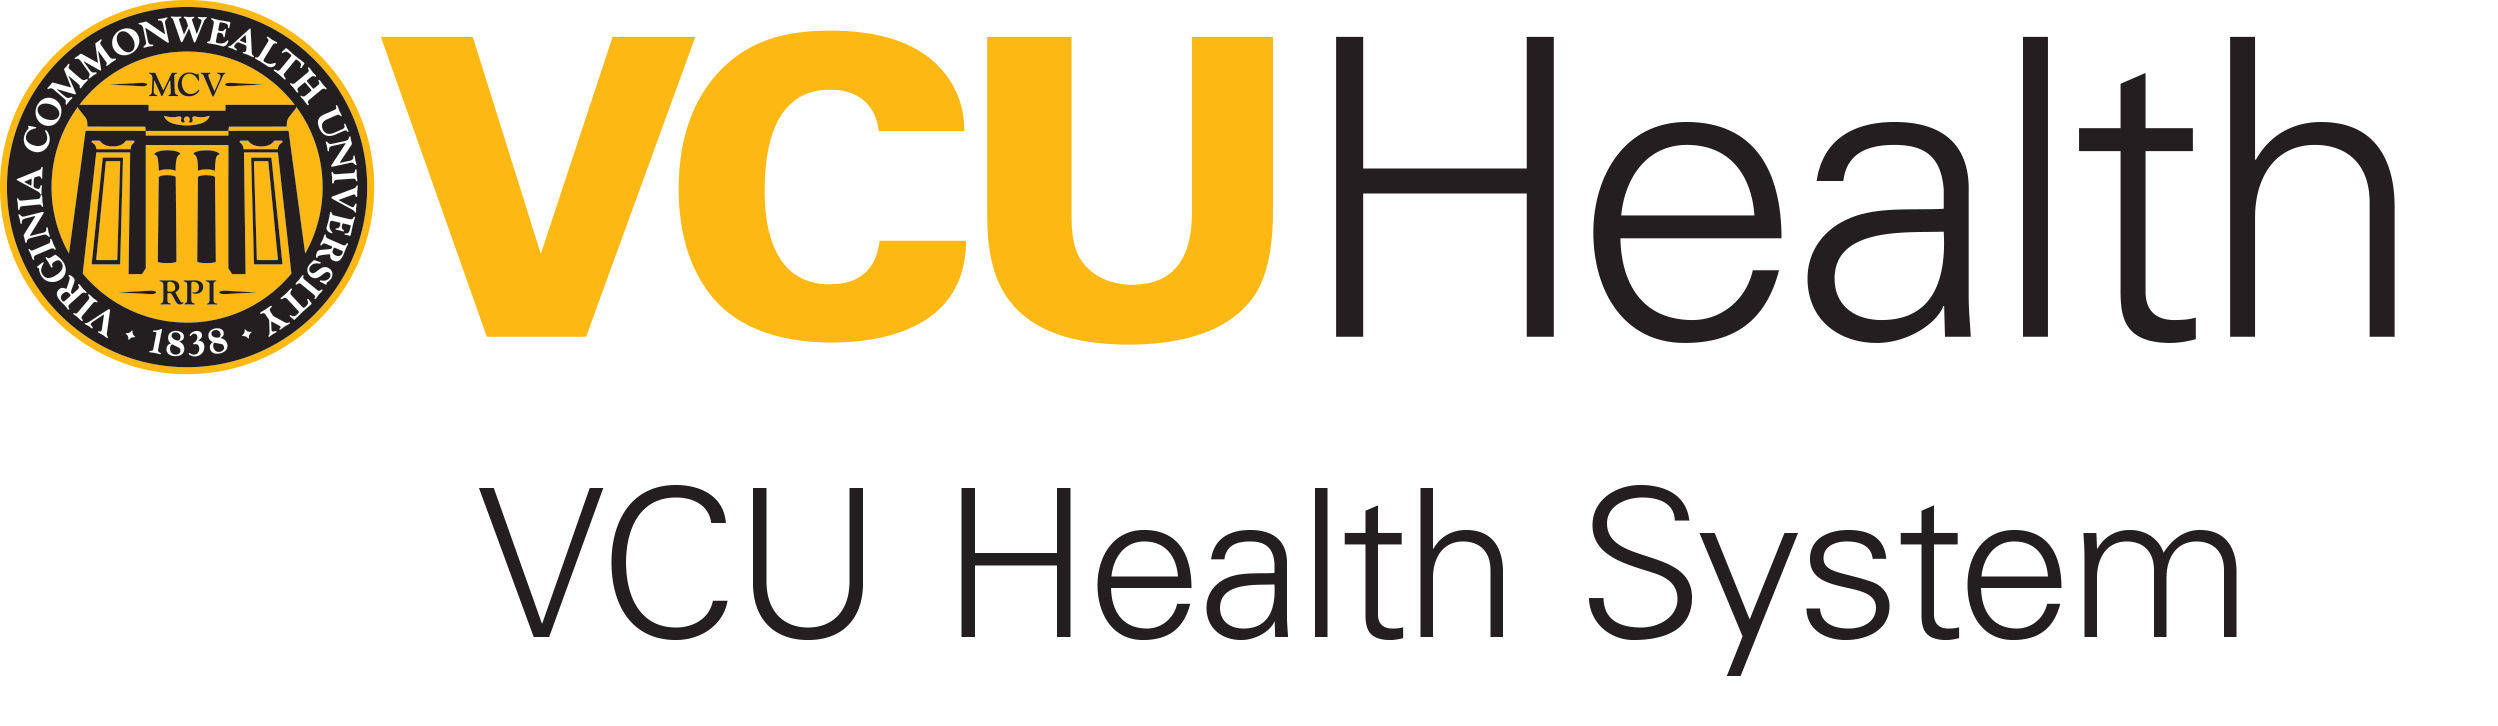 VCUHS Logo - Career Search | VCU Health